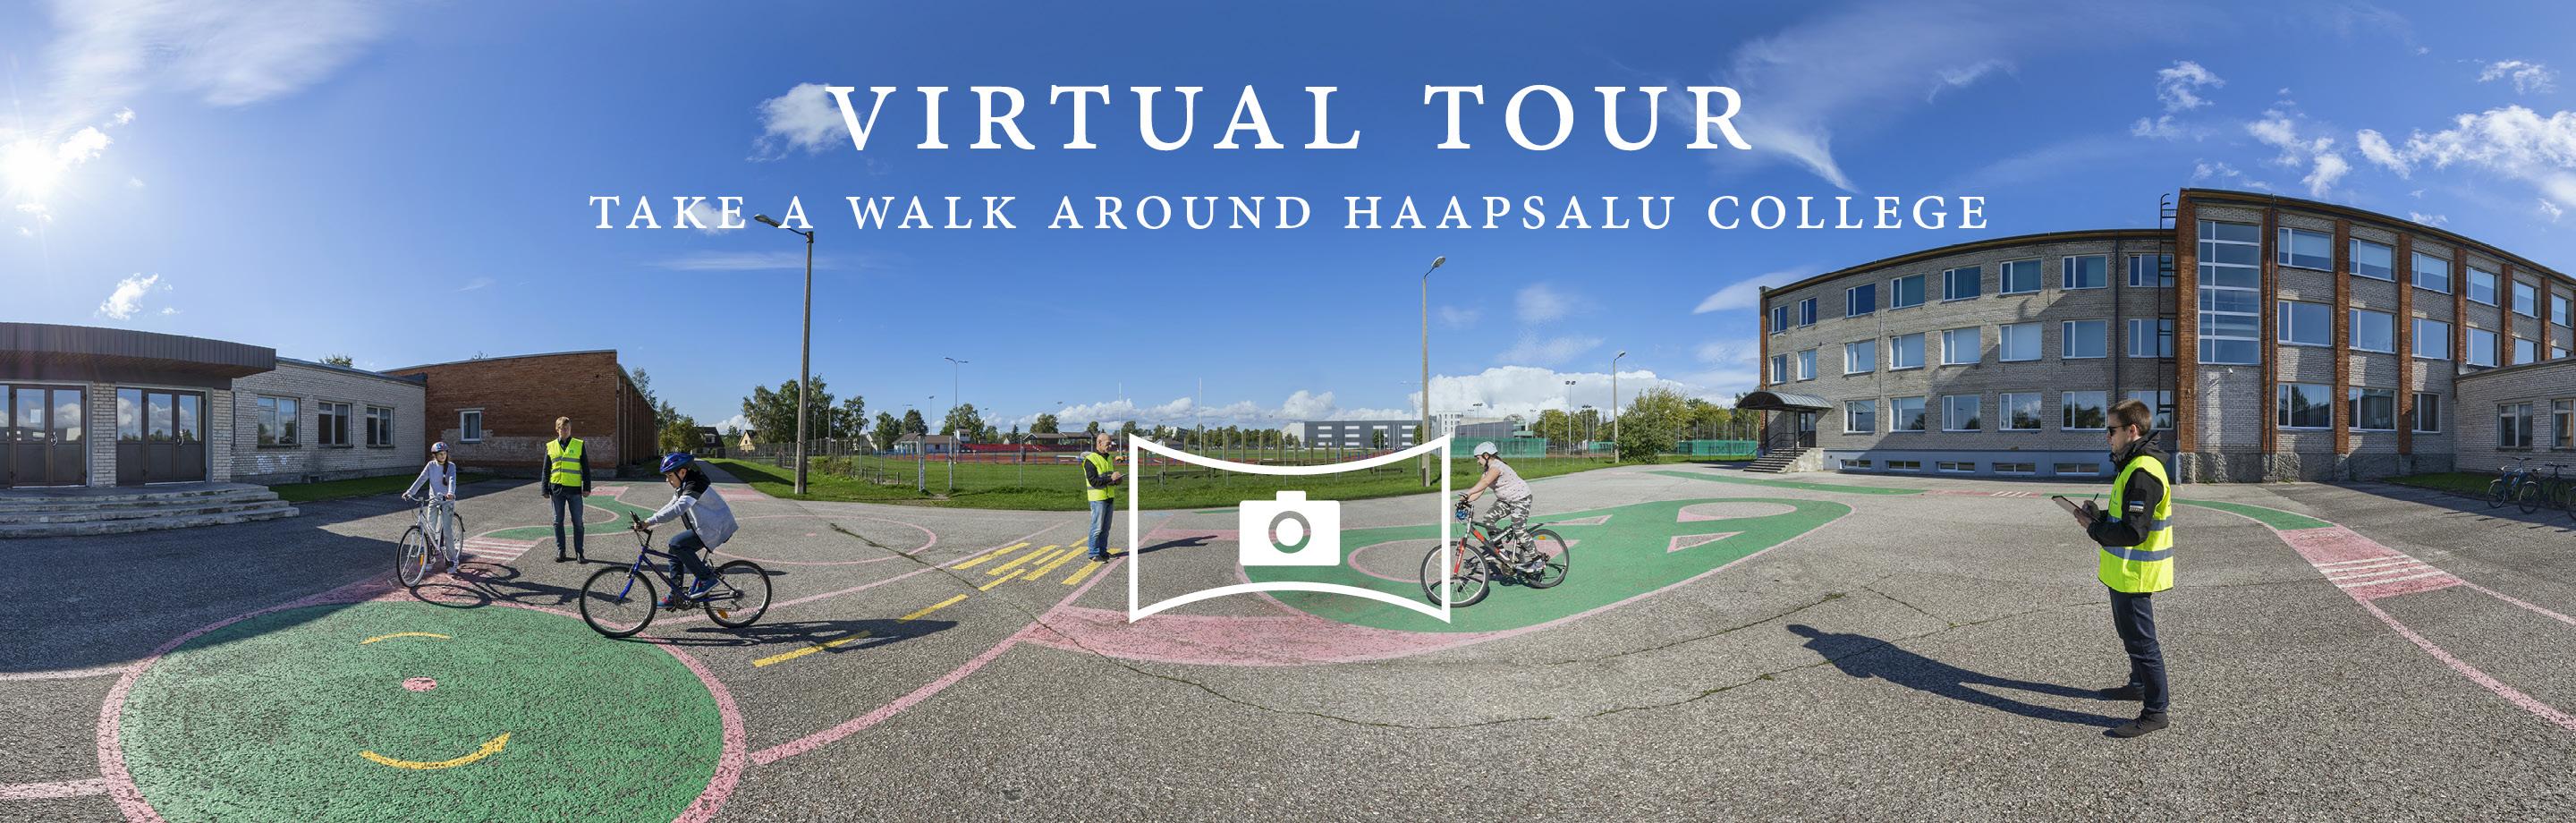 Virtual tour Haapsalu traffic area